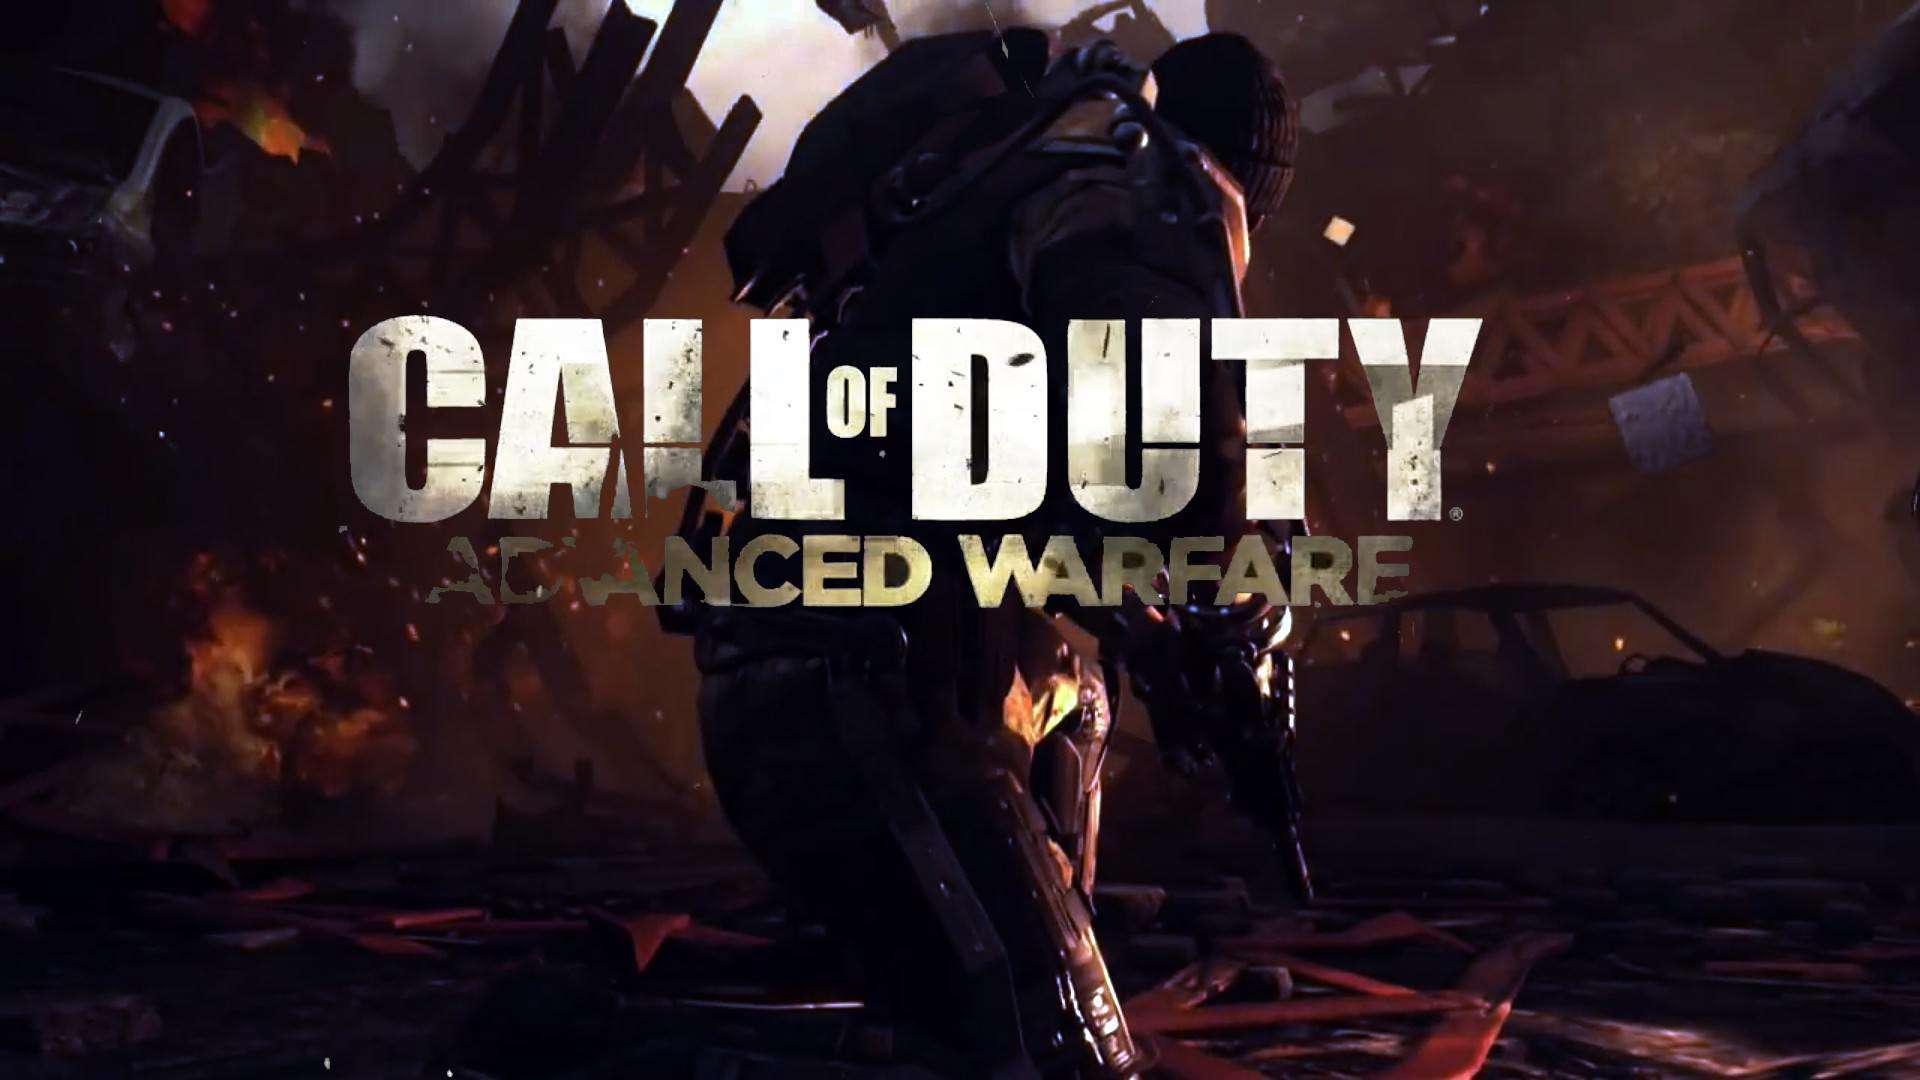 Call of duty Advanced Warfare (2014) PC Game